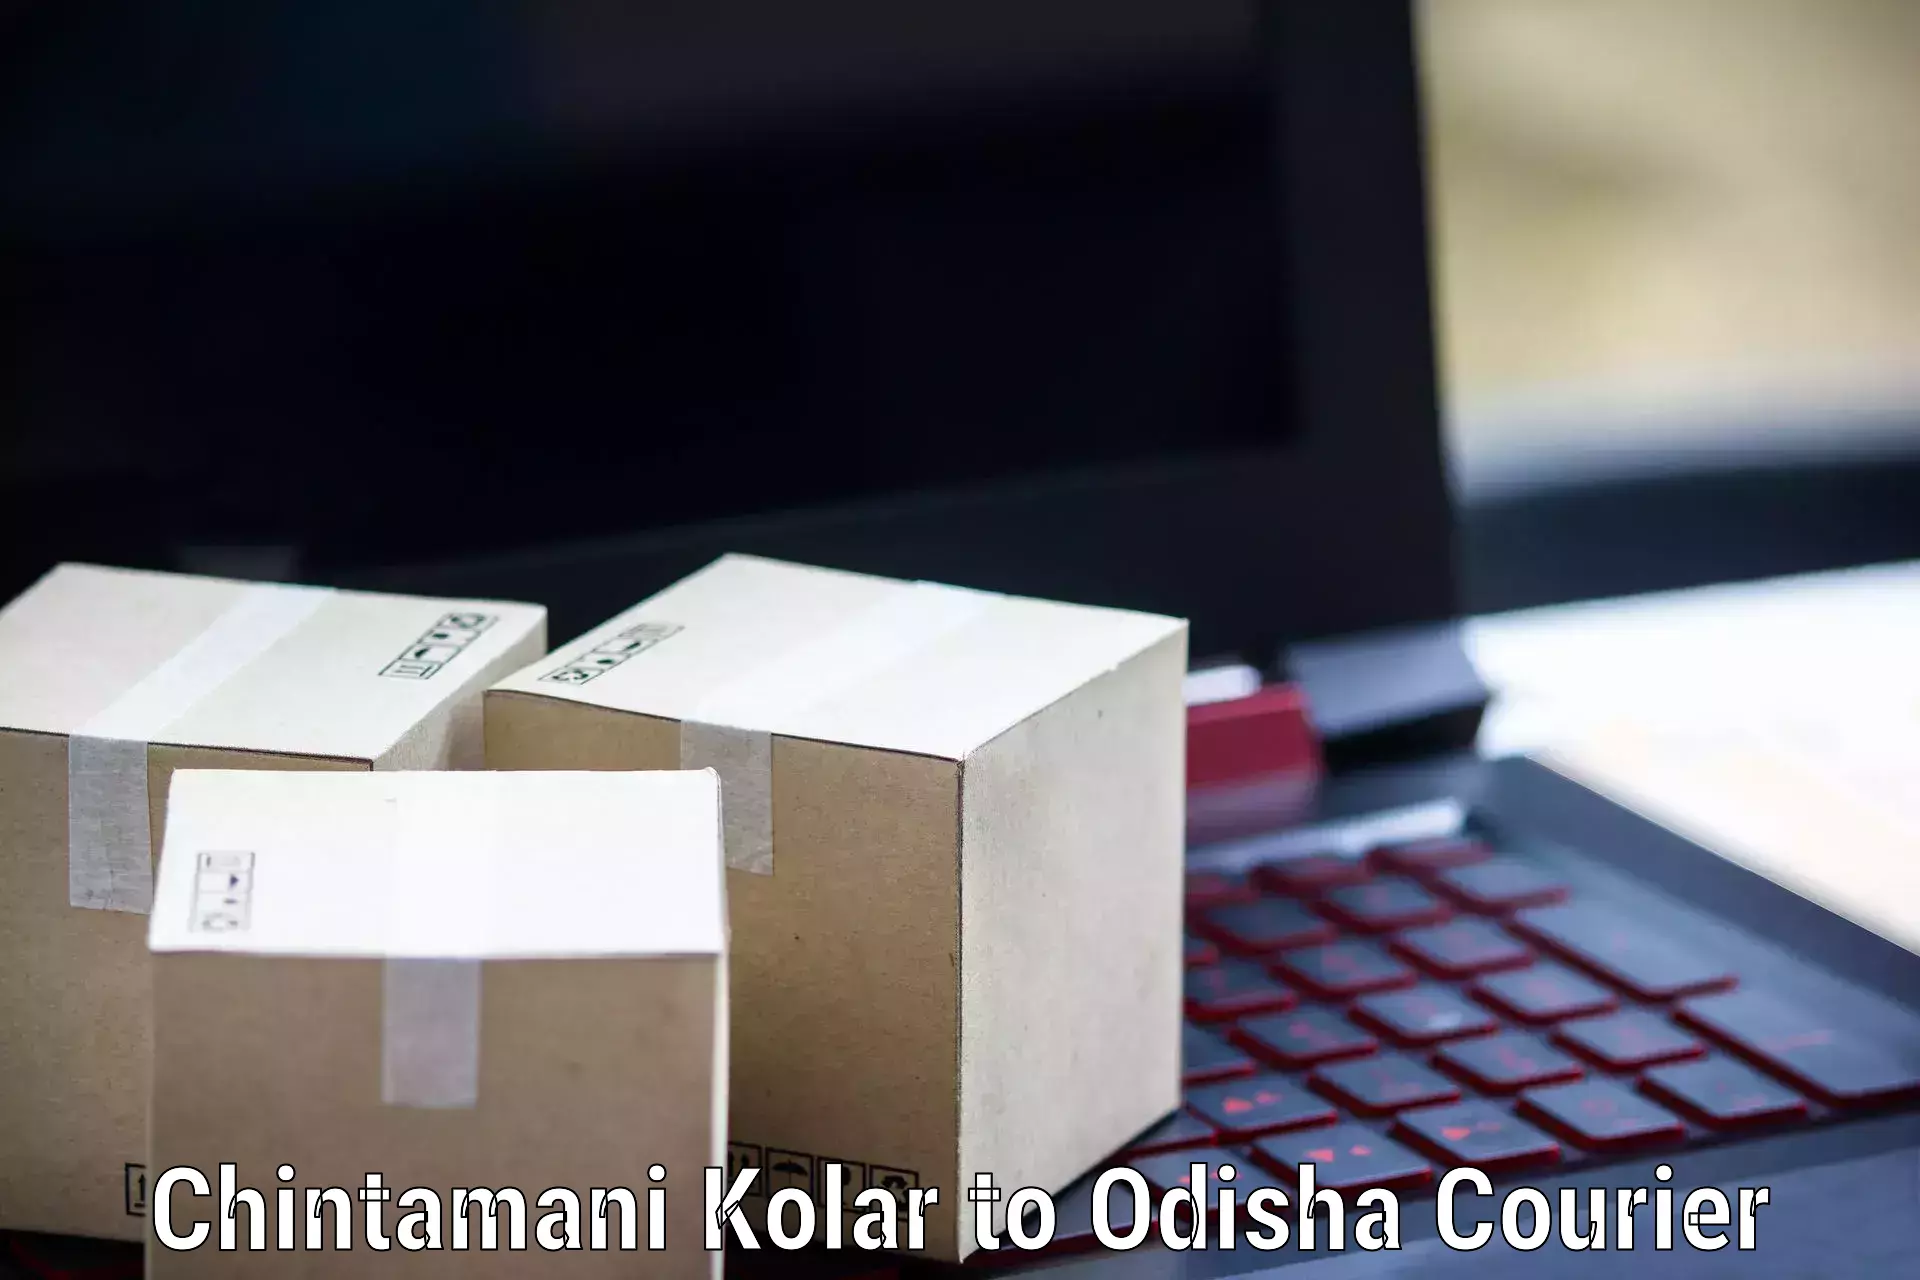 Courier service booking Chintamani Kolar to Bahalda